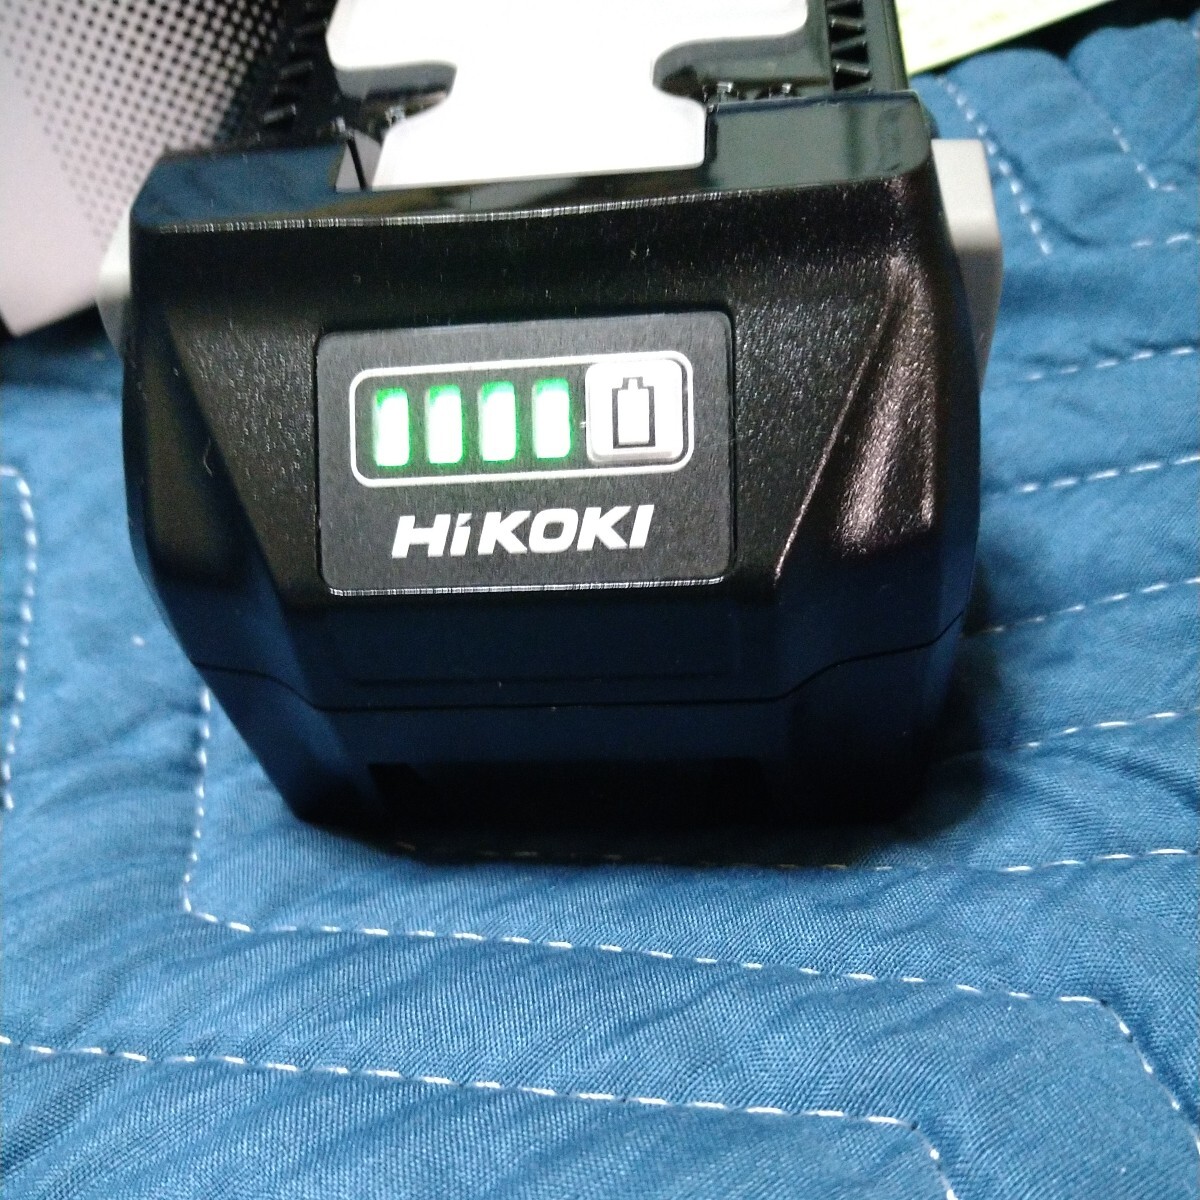 HIKOKI BSL 36A18 is since ki36V battery 